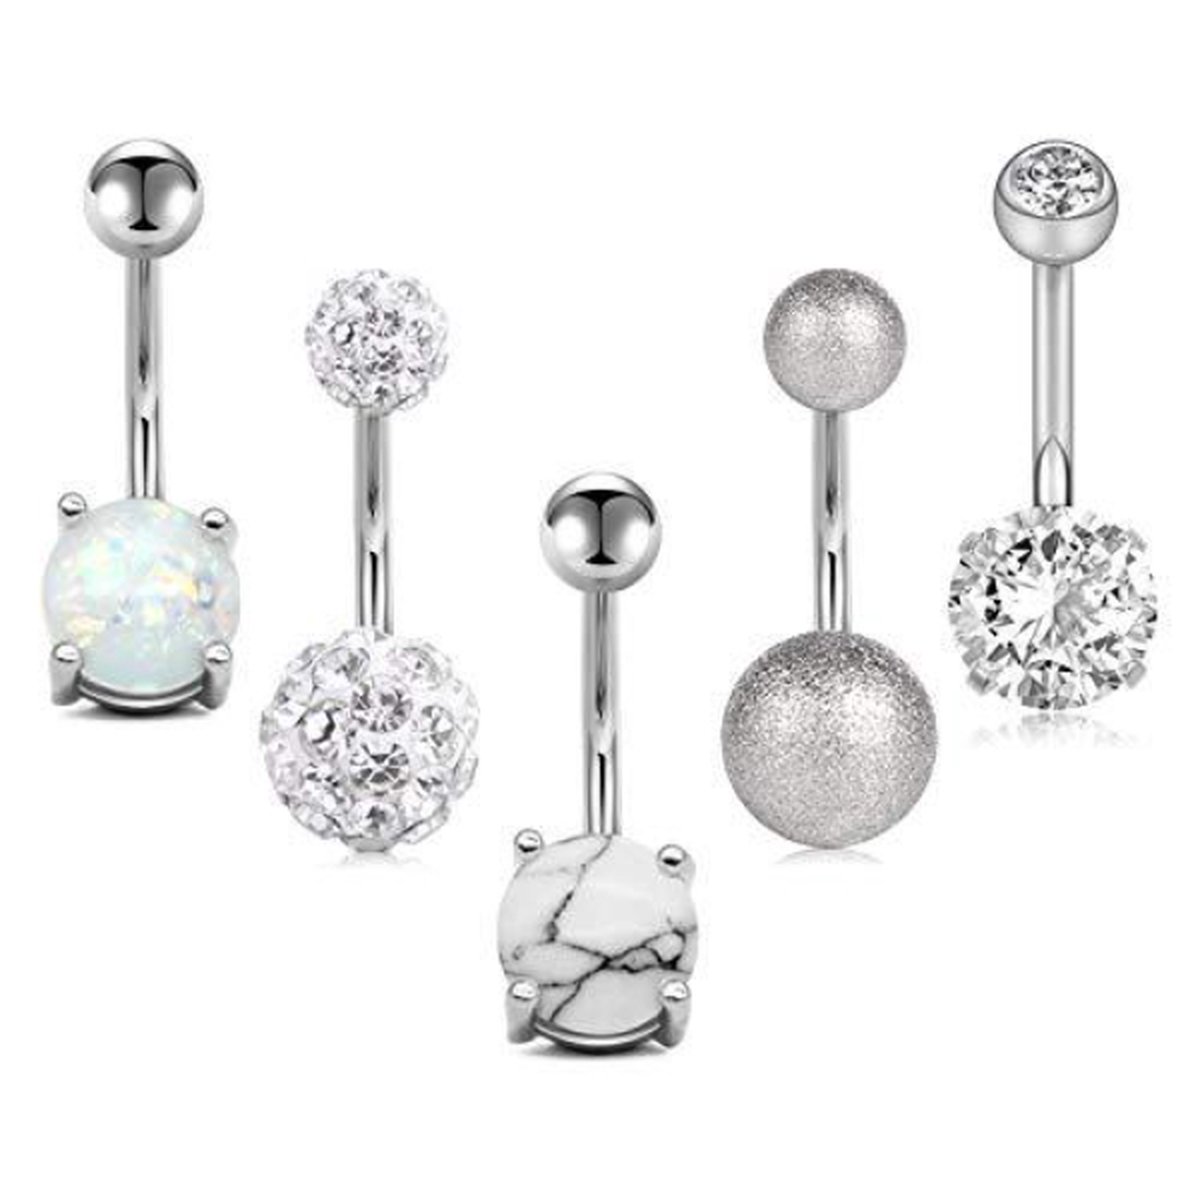 Plux Fashion Piercing 5-pack - Zilver - 2,5cm - Sieraden - Zilveren piercings - piercing pack - Stainless Steel - piercings - HipHop piercings - Sieraden Cadeau - fancy piercings- Luxe Style - Duurzame Kwaliteit - Moederdag Cadeau - Vaderdag Cadeau